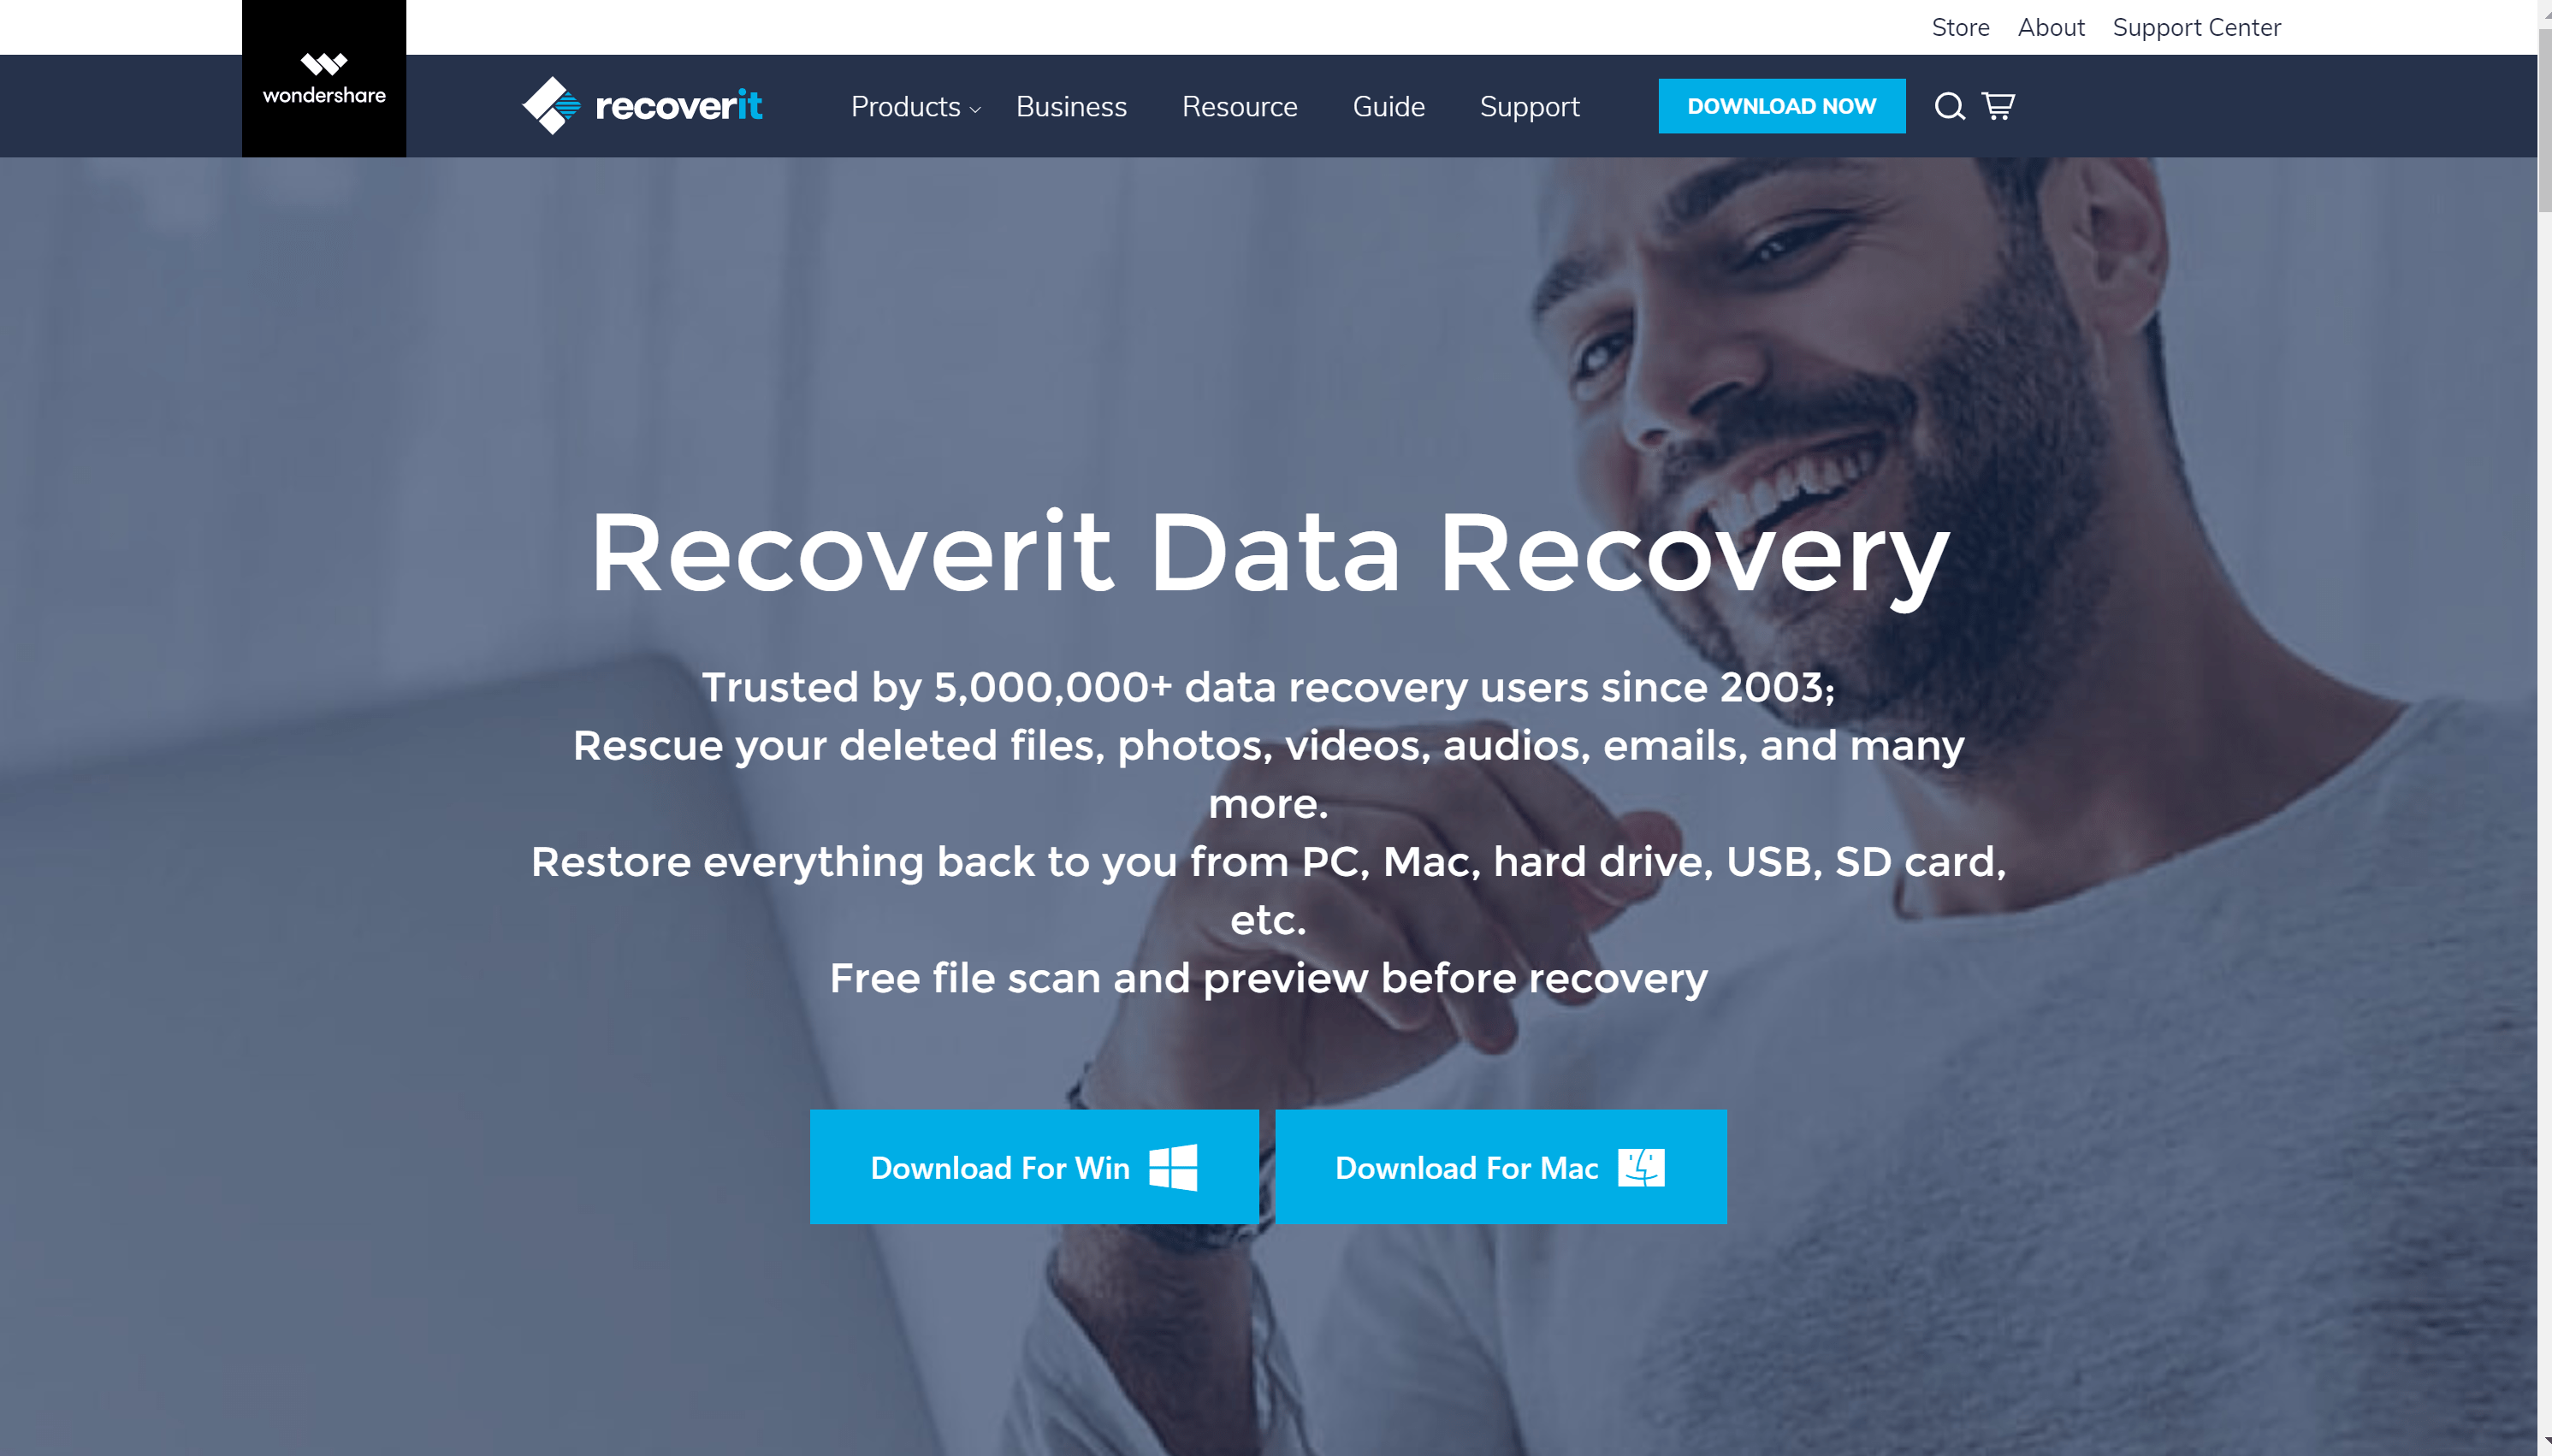 seagate file recovery software promo code